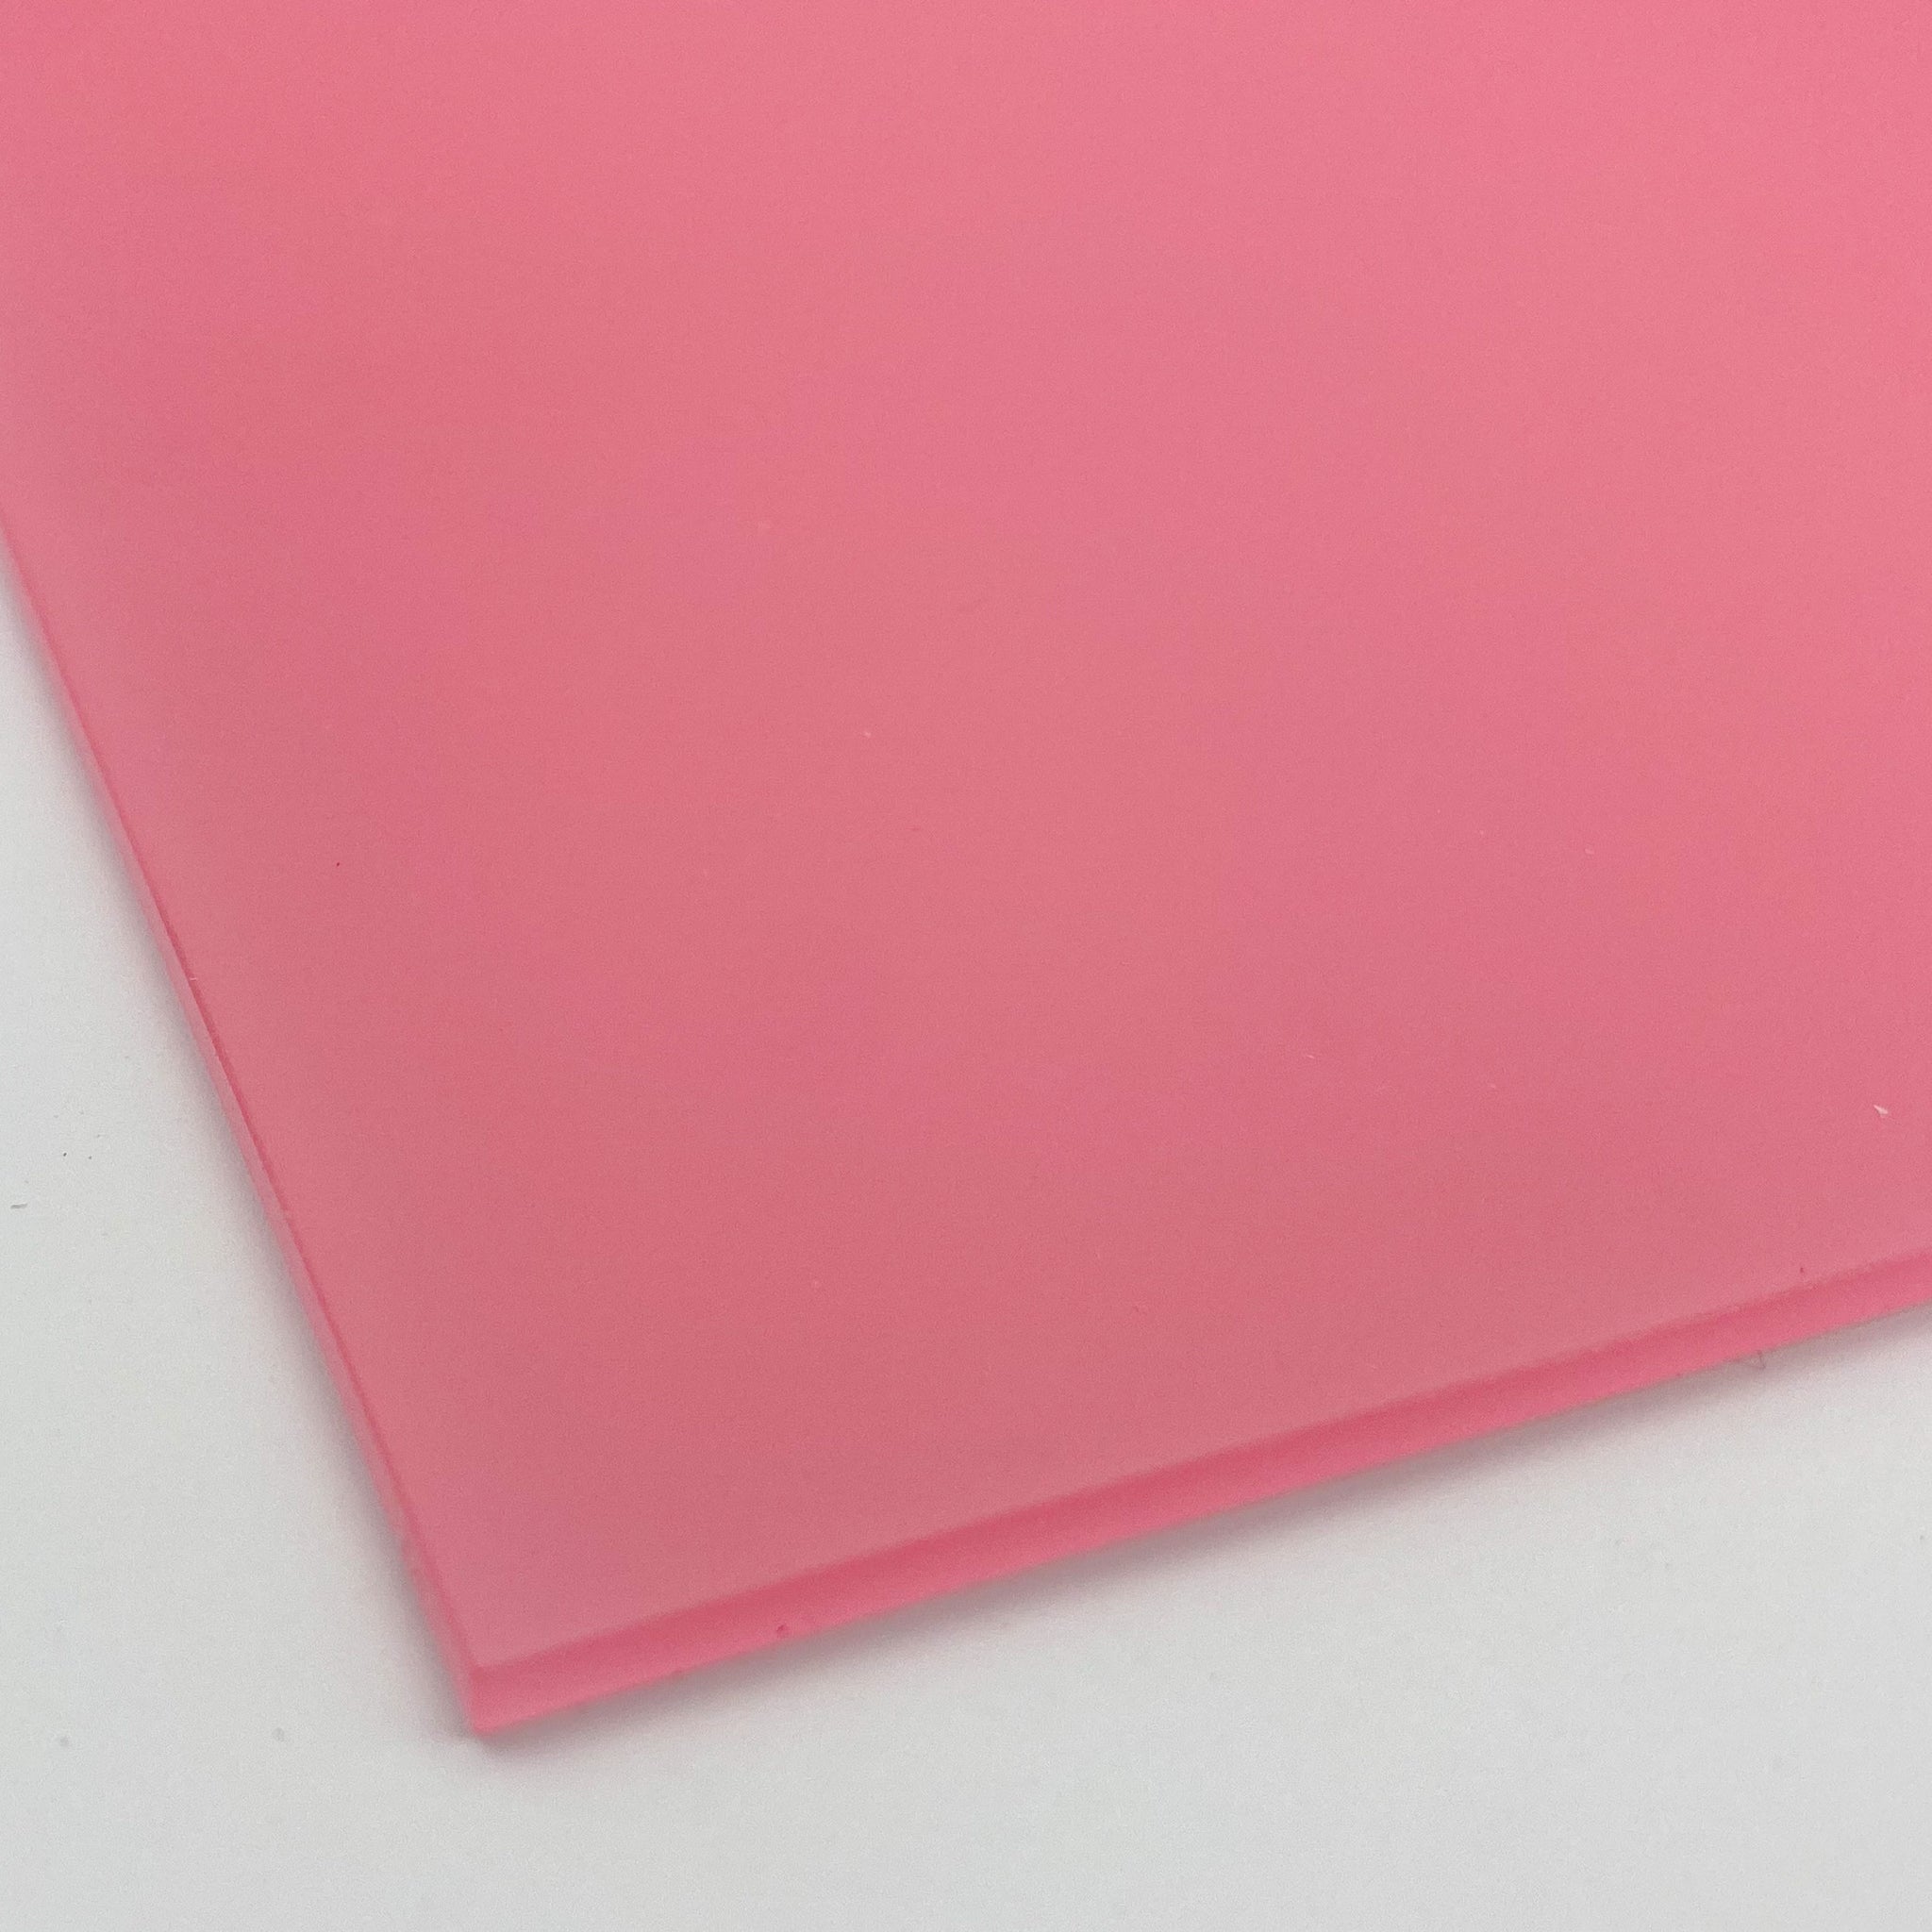 Pastel Light Pink Acrylic Plexiglas Sheet for Laser Cutting